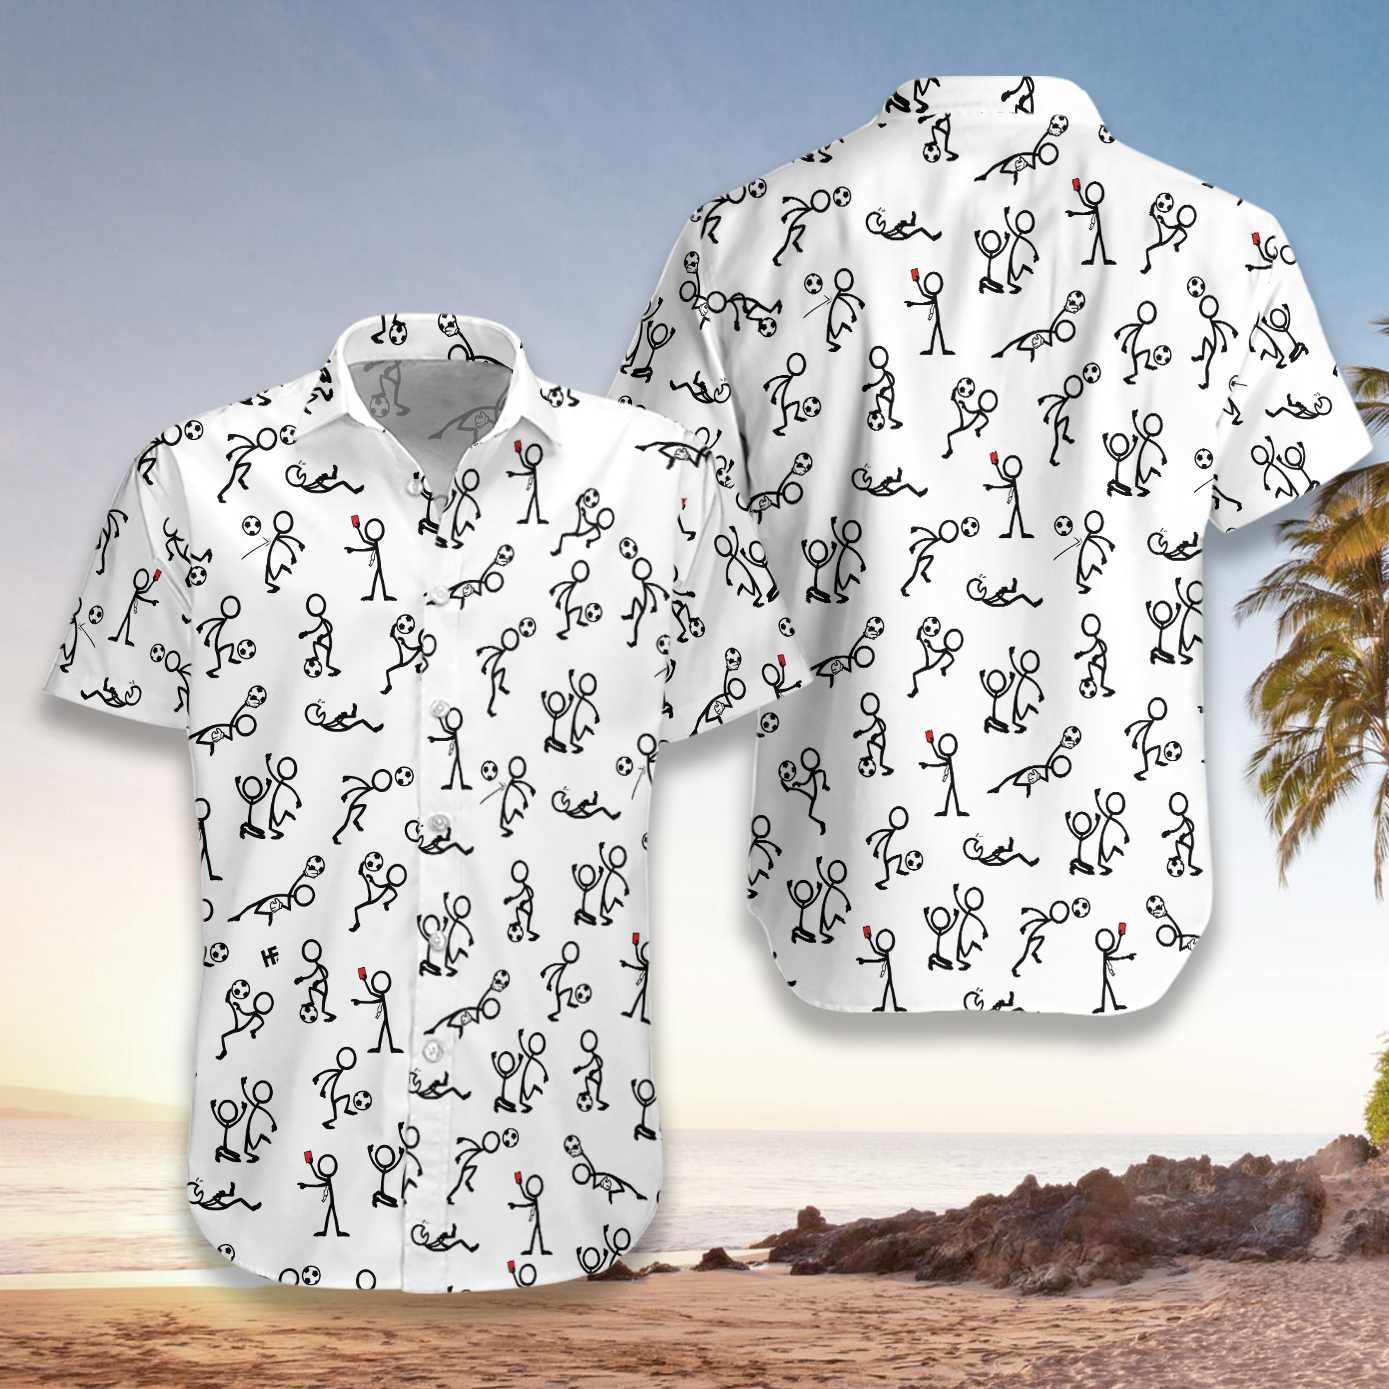 Hawaiian Aloha Shirts Stickfigures Playing Soccer